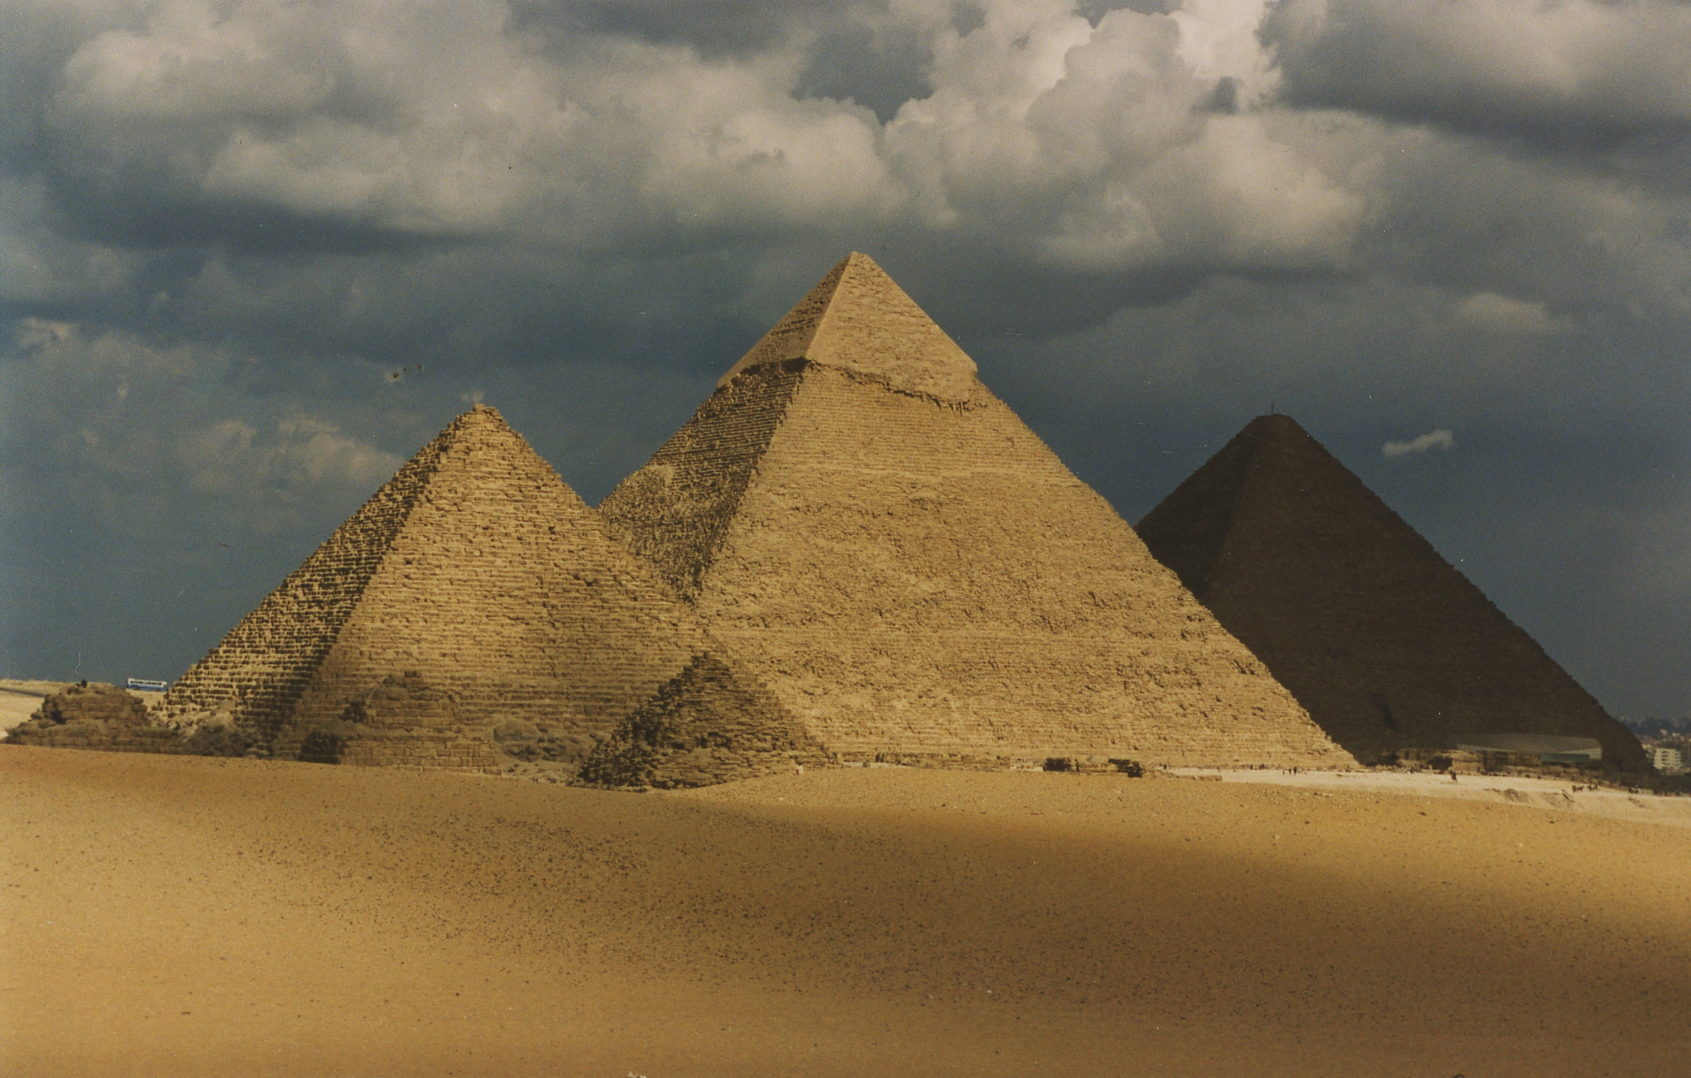 The Pyramids of Giza. Photos of Egypt ©1998 Ann James Massey